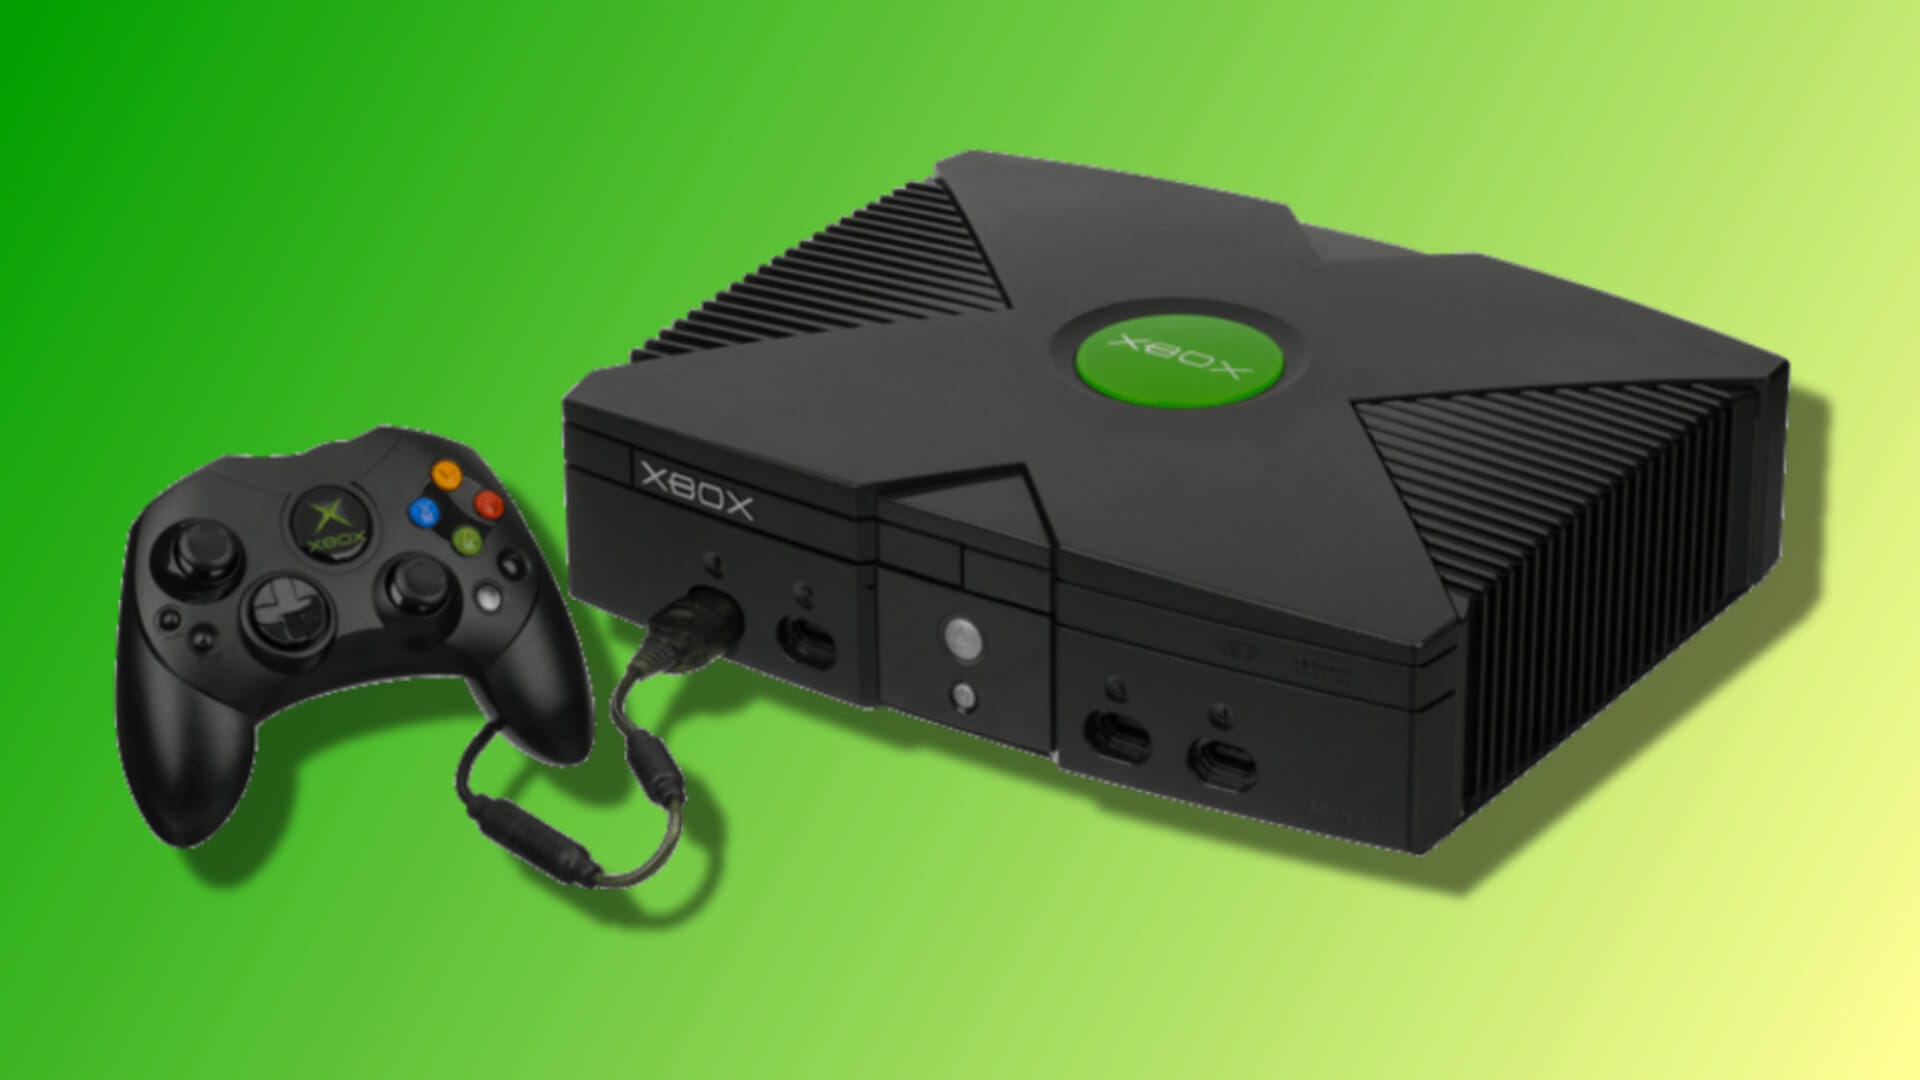 The original Xbox.